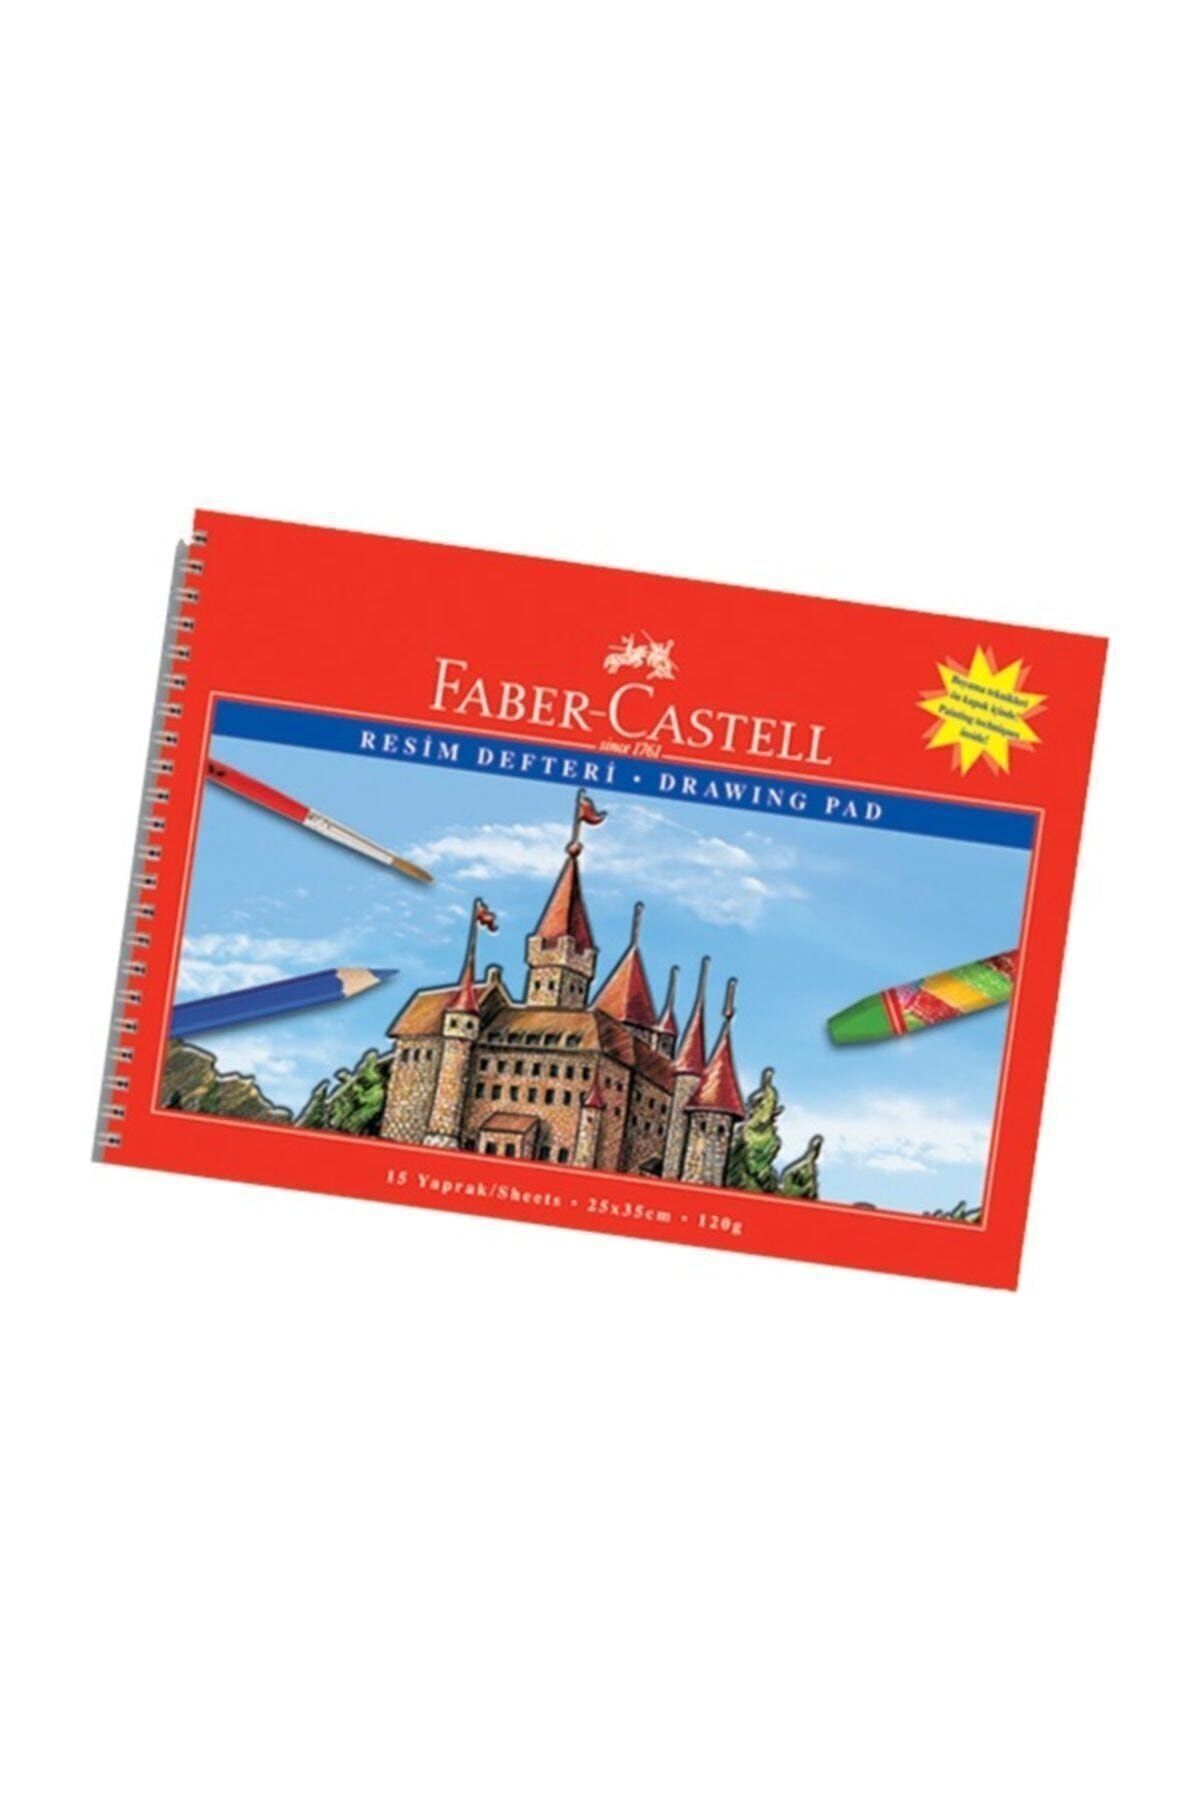 Faber Castell Karton Kapak Resim Defteri 25x35 Cm, 15 Yaprak